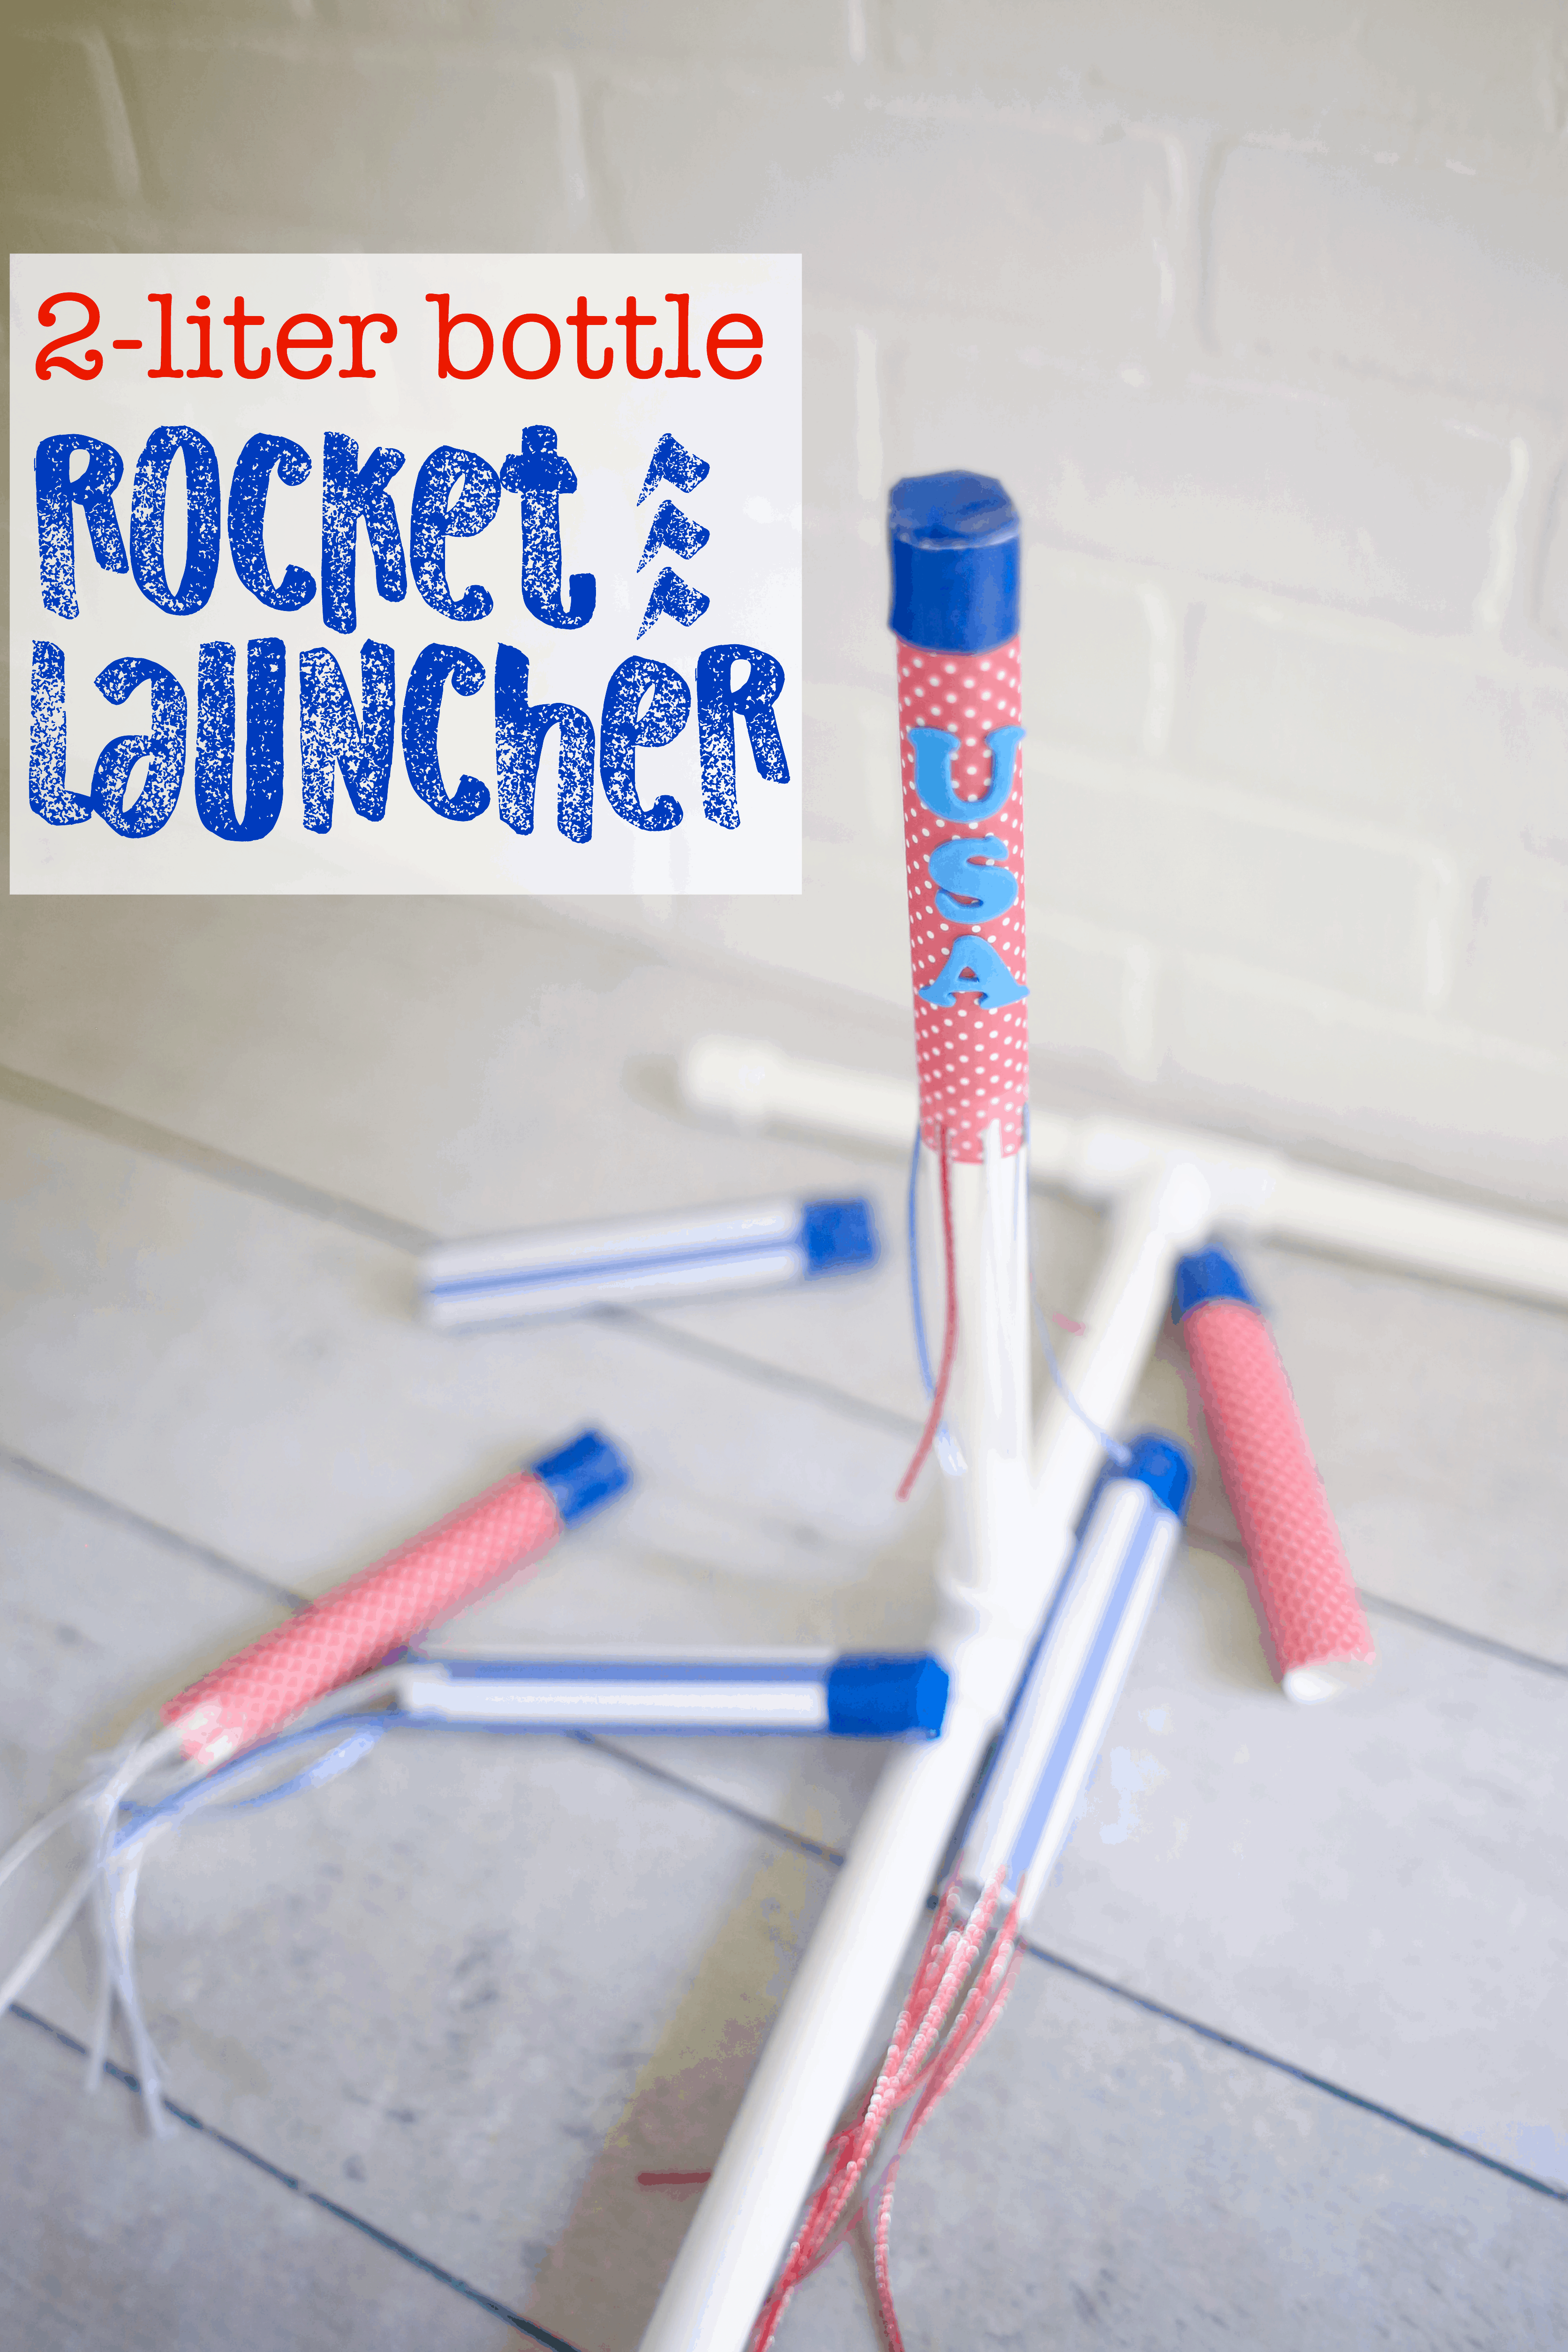 2-liter bottle Rocket Launcher